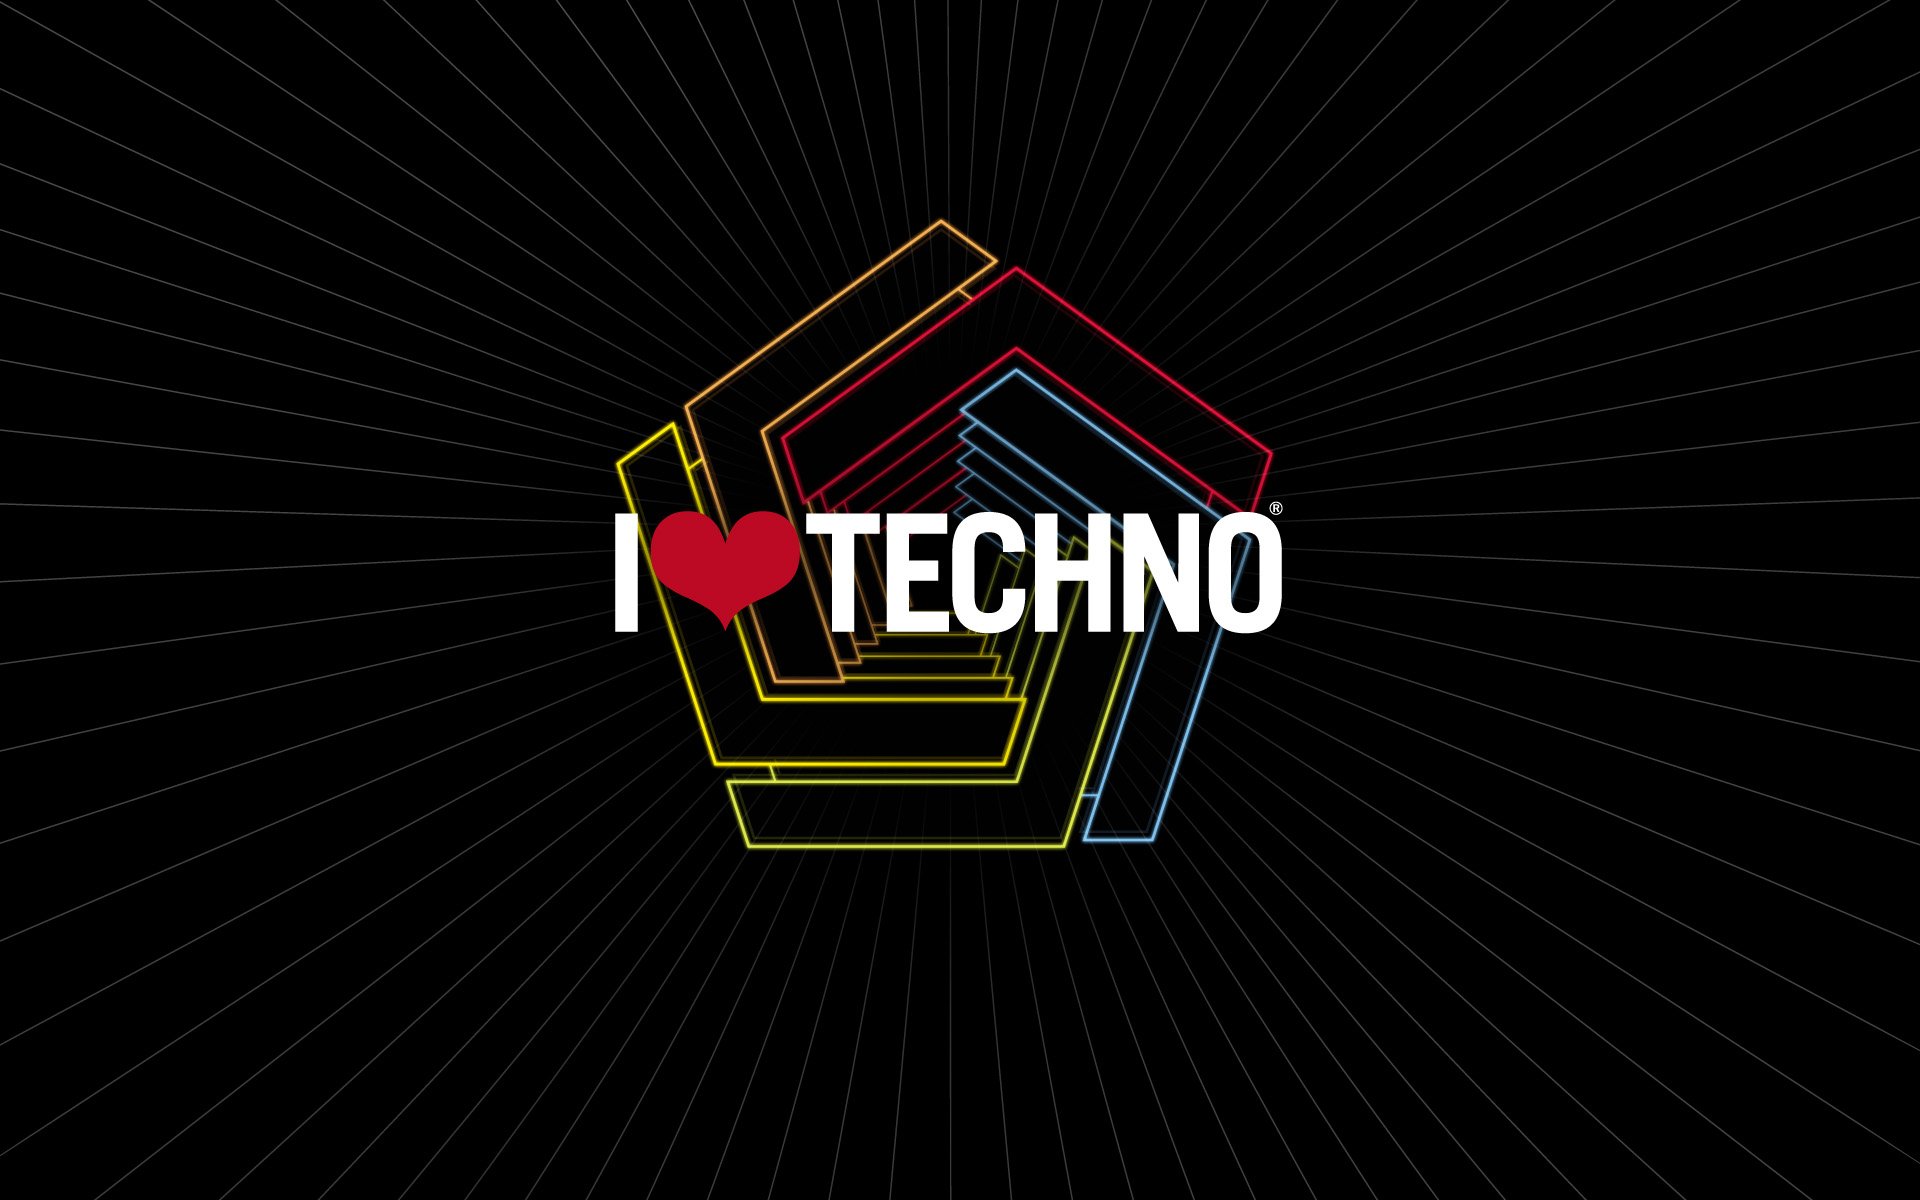 Techno Music Wallpaper Desktop Image Of